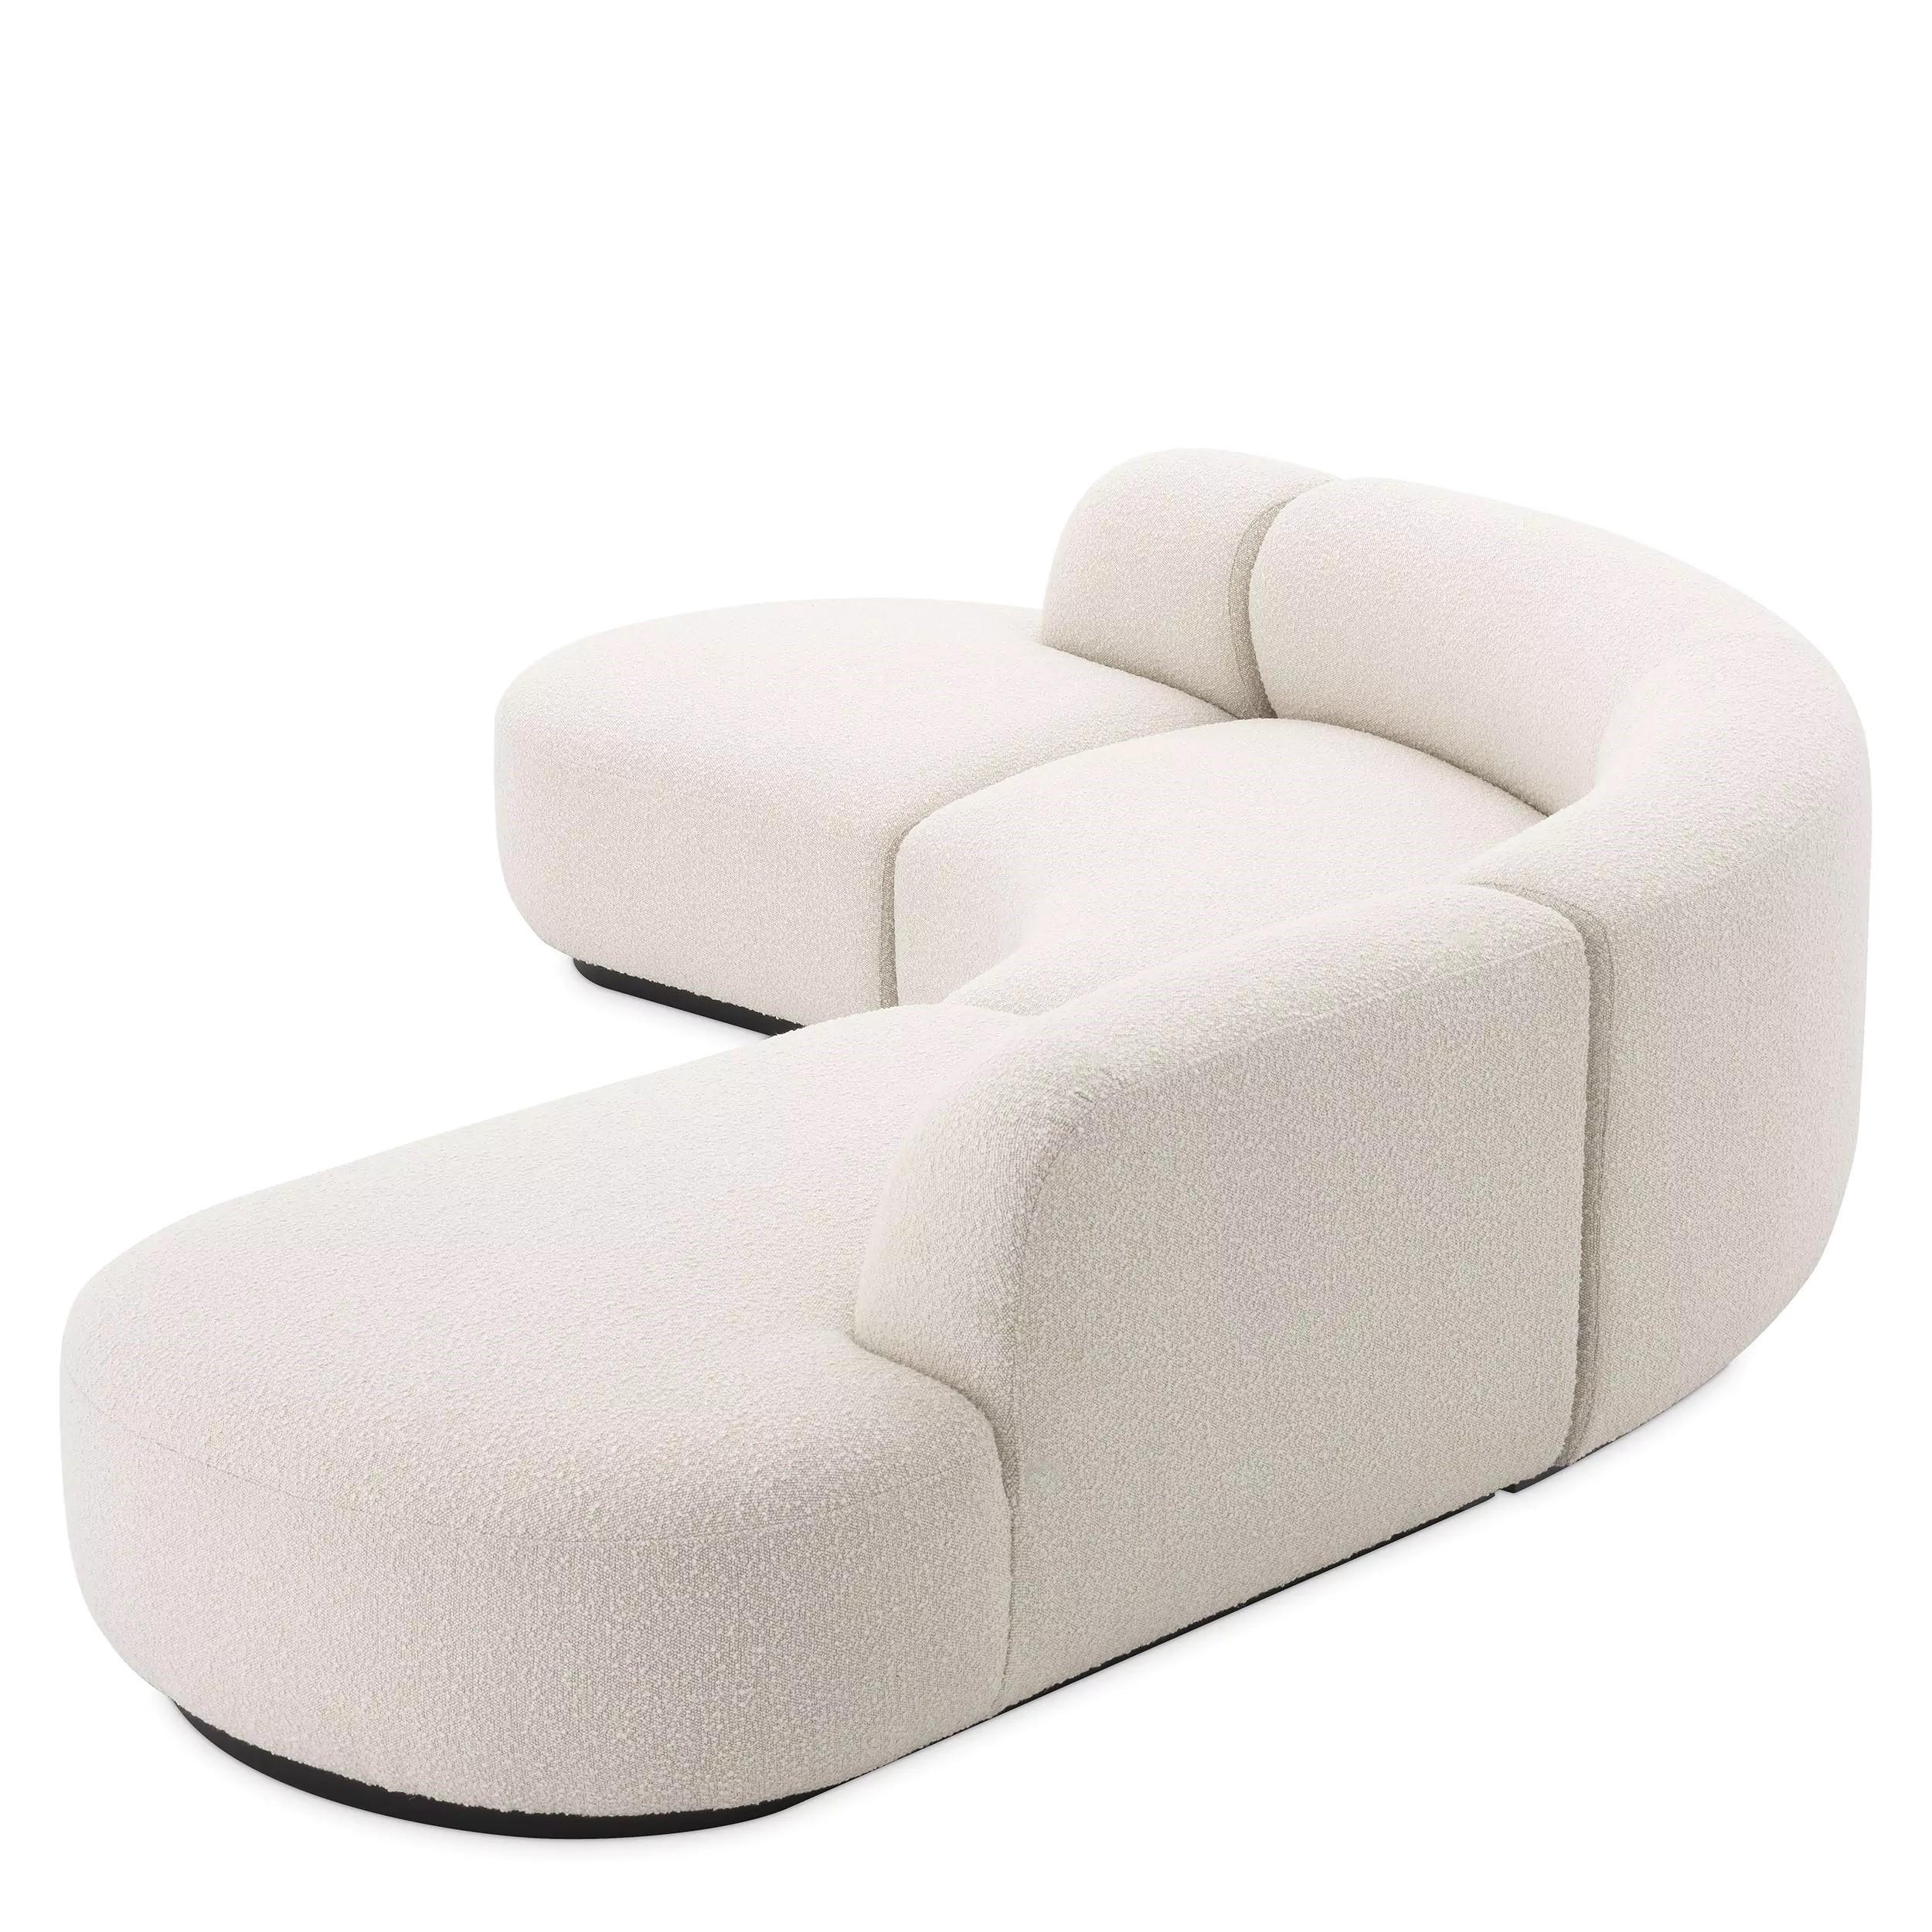 1950er Jahre Boomerang-Design Stil beige Bouclé-Stoff große geschwungene Sofa.